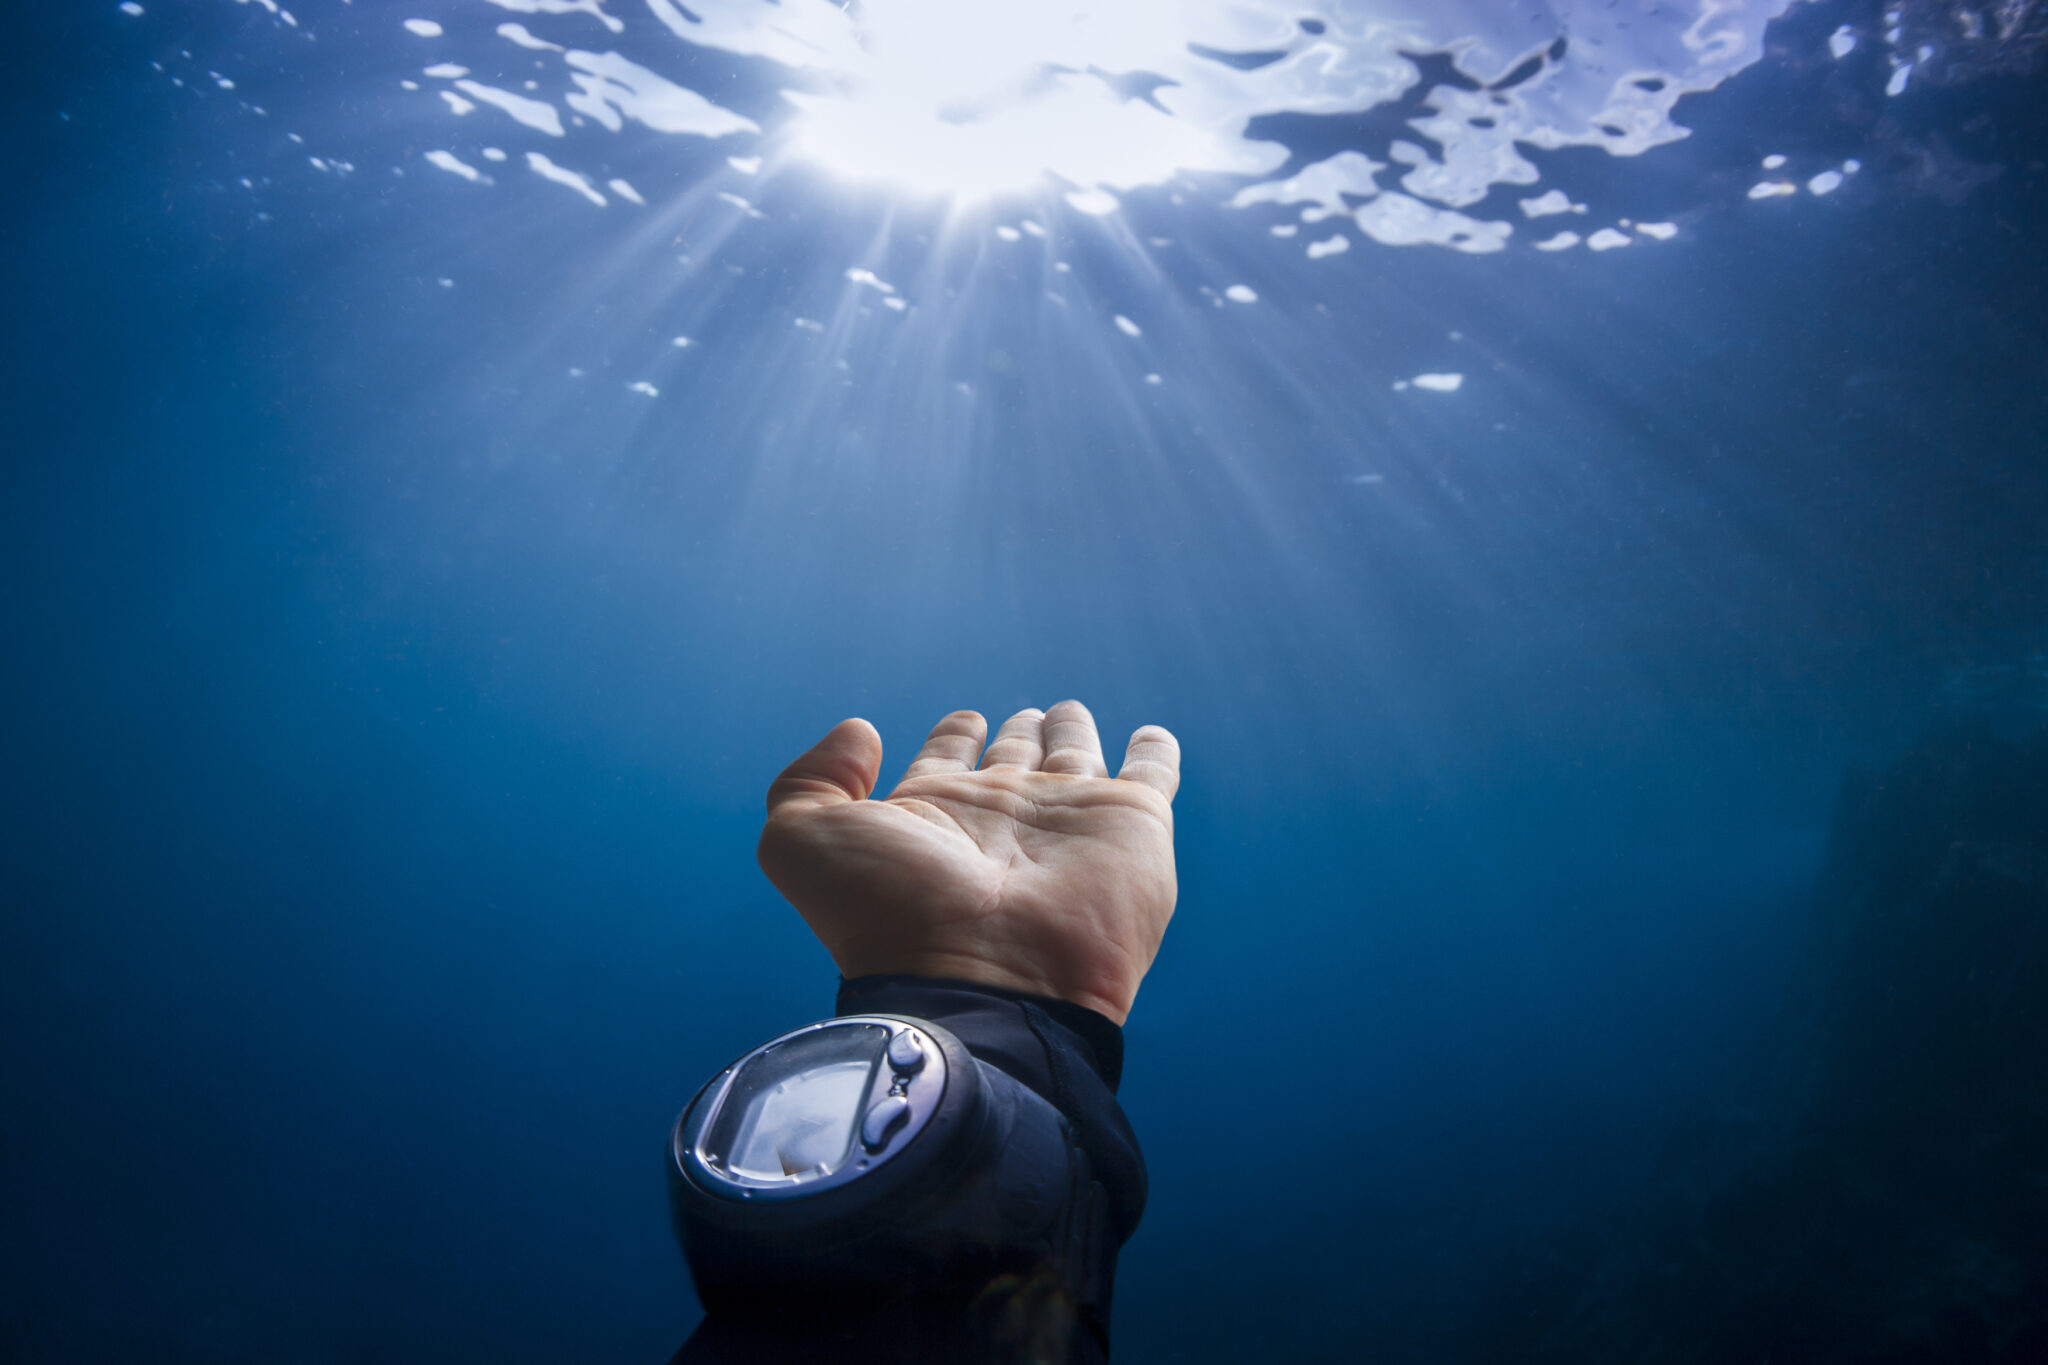 marine life hand signals underwater communication